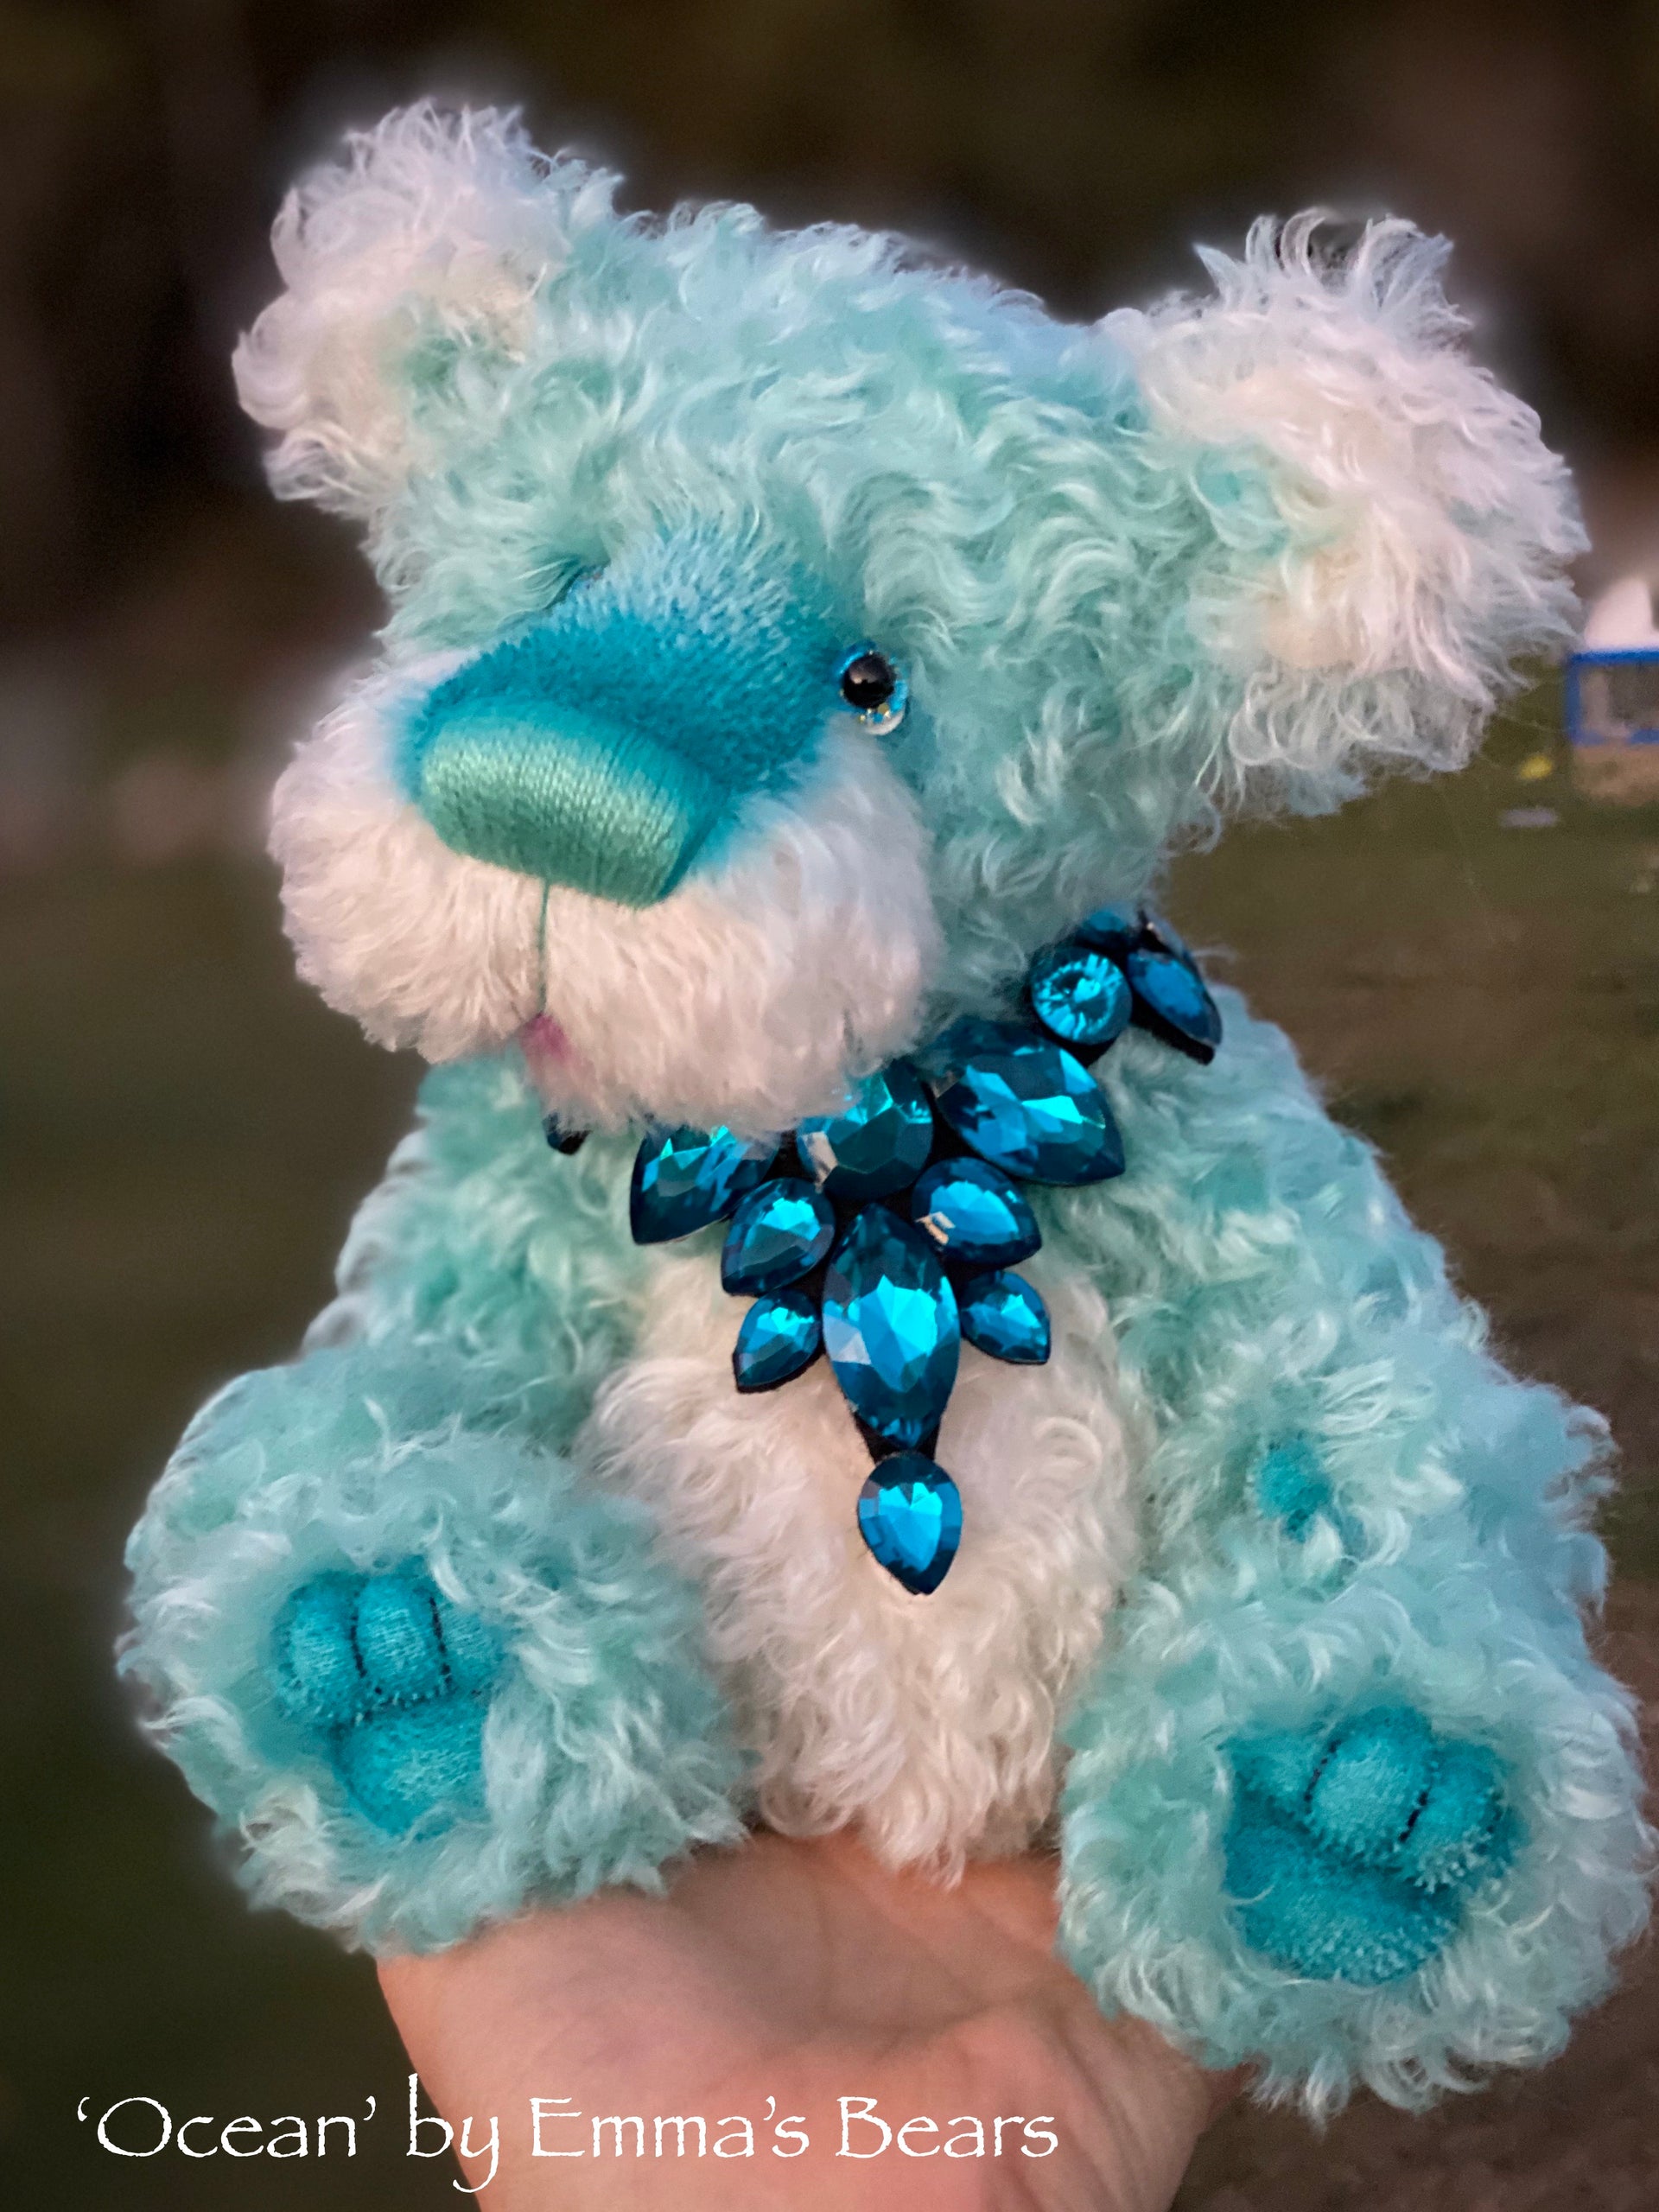 Ocean - 11" Hand Dyed Kid Mohair Artist Bear by Emma's Bears - OOAK